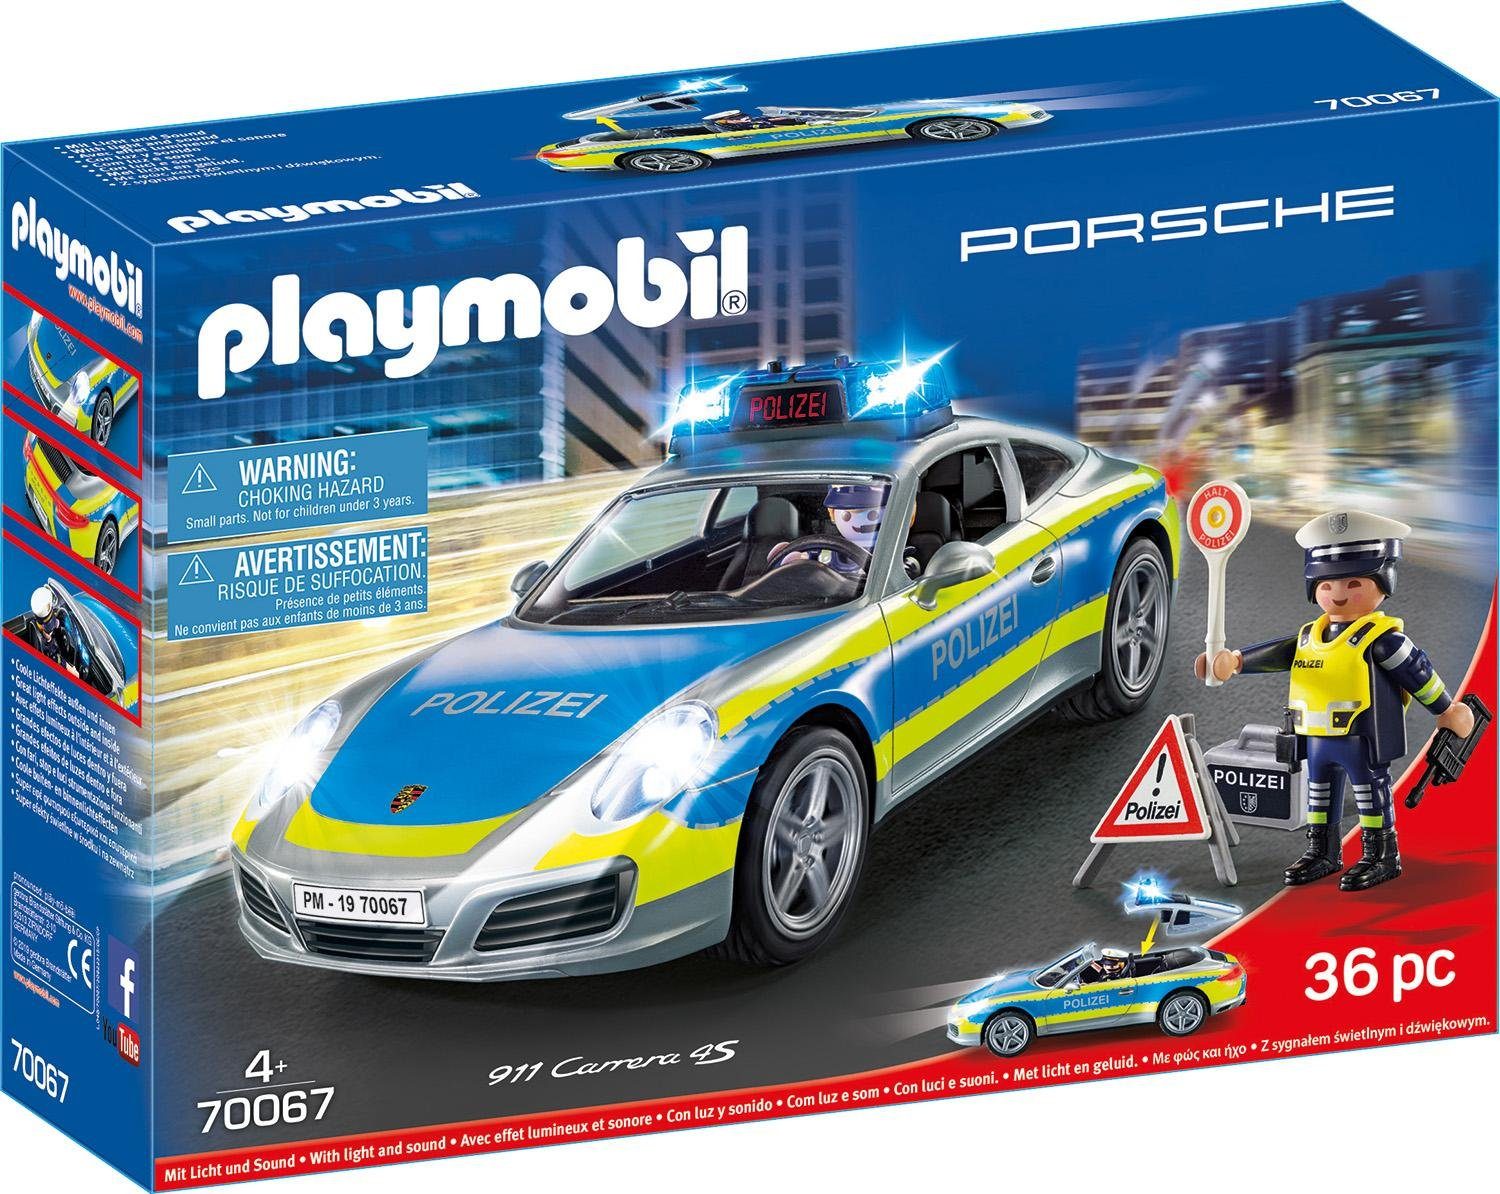 Playmobil® Konstruktions-Spielset Porsche 911 Made Carrera St), Germany 4S Action, (70067), City Polizei in (36